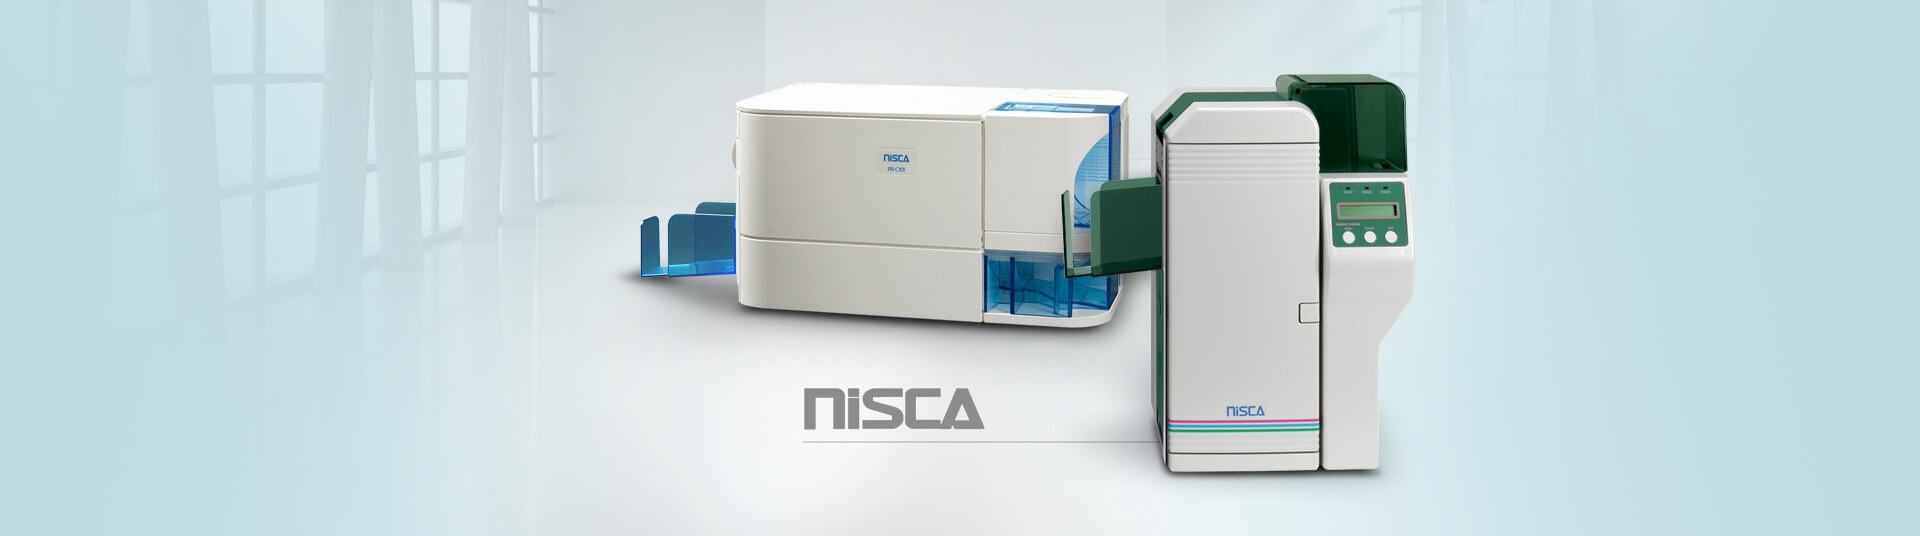 Nisca PR-C101 Printers